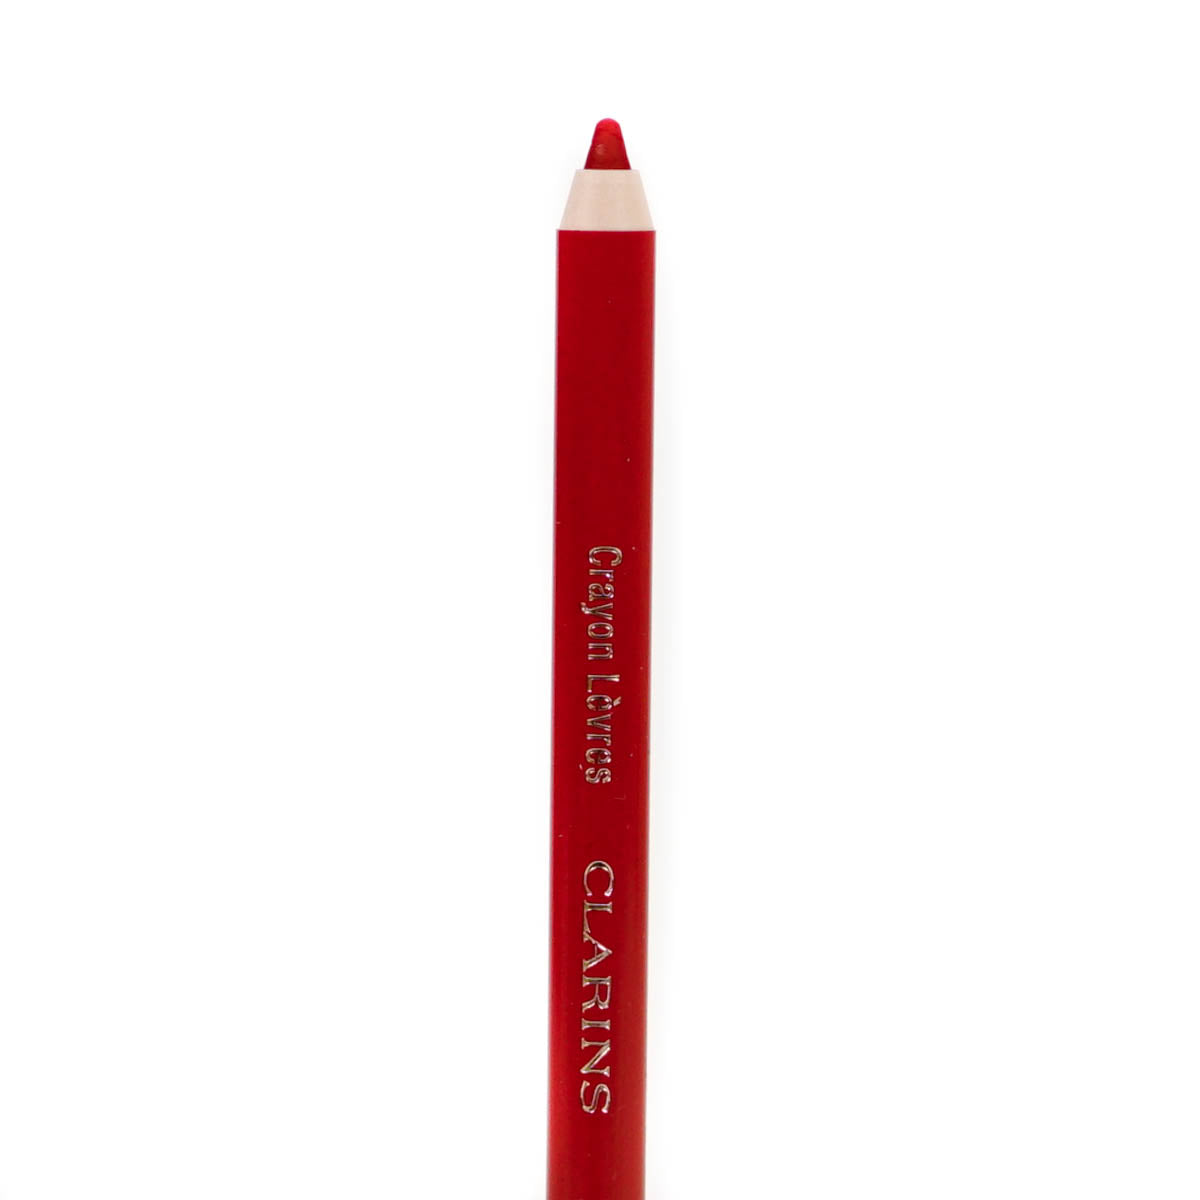 Clarins Lipliner Pencil 06 Red